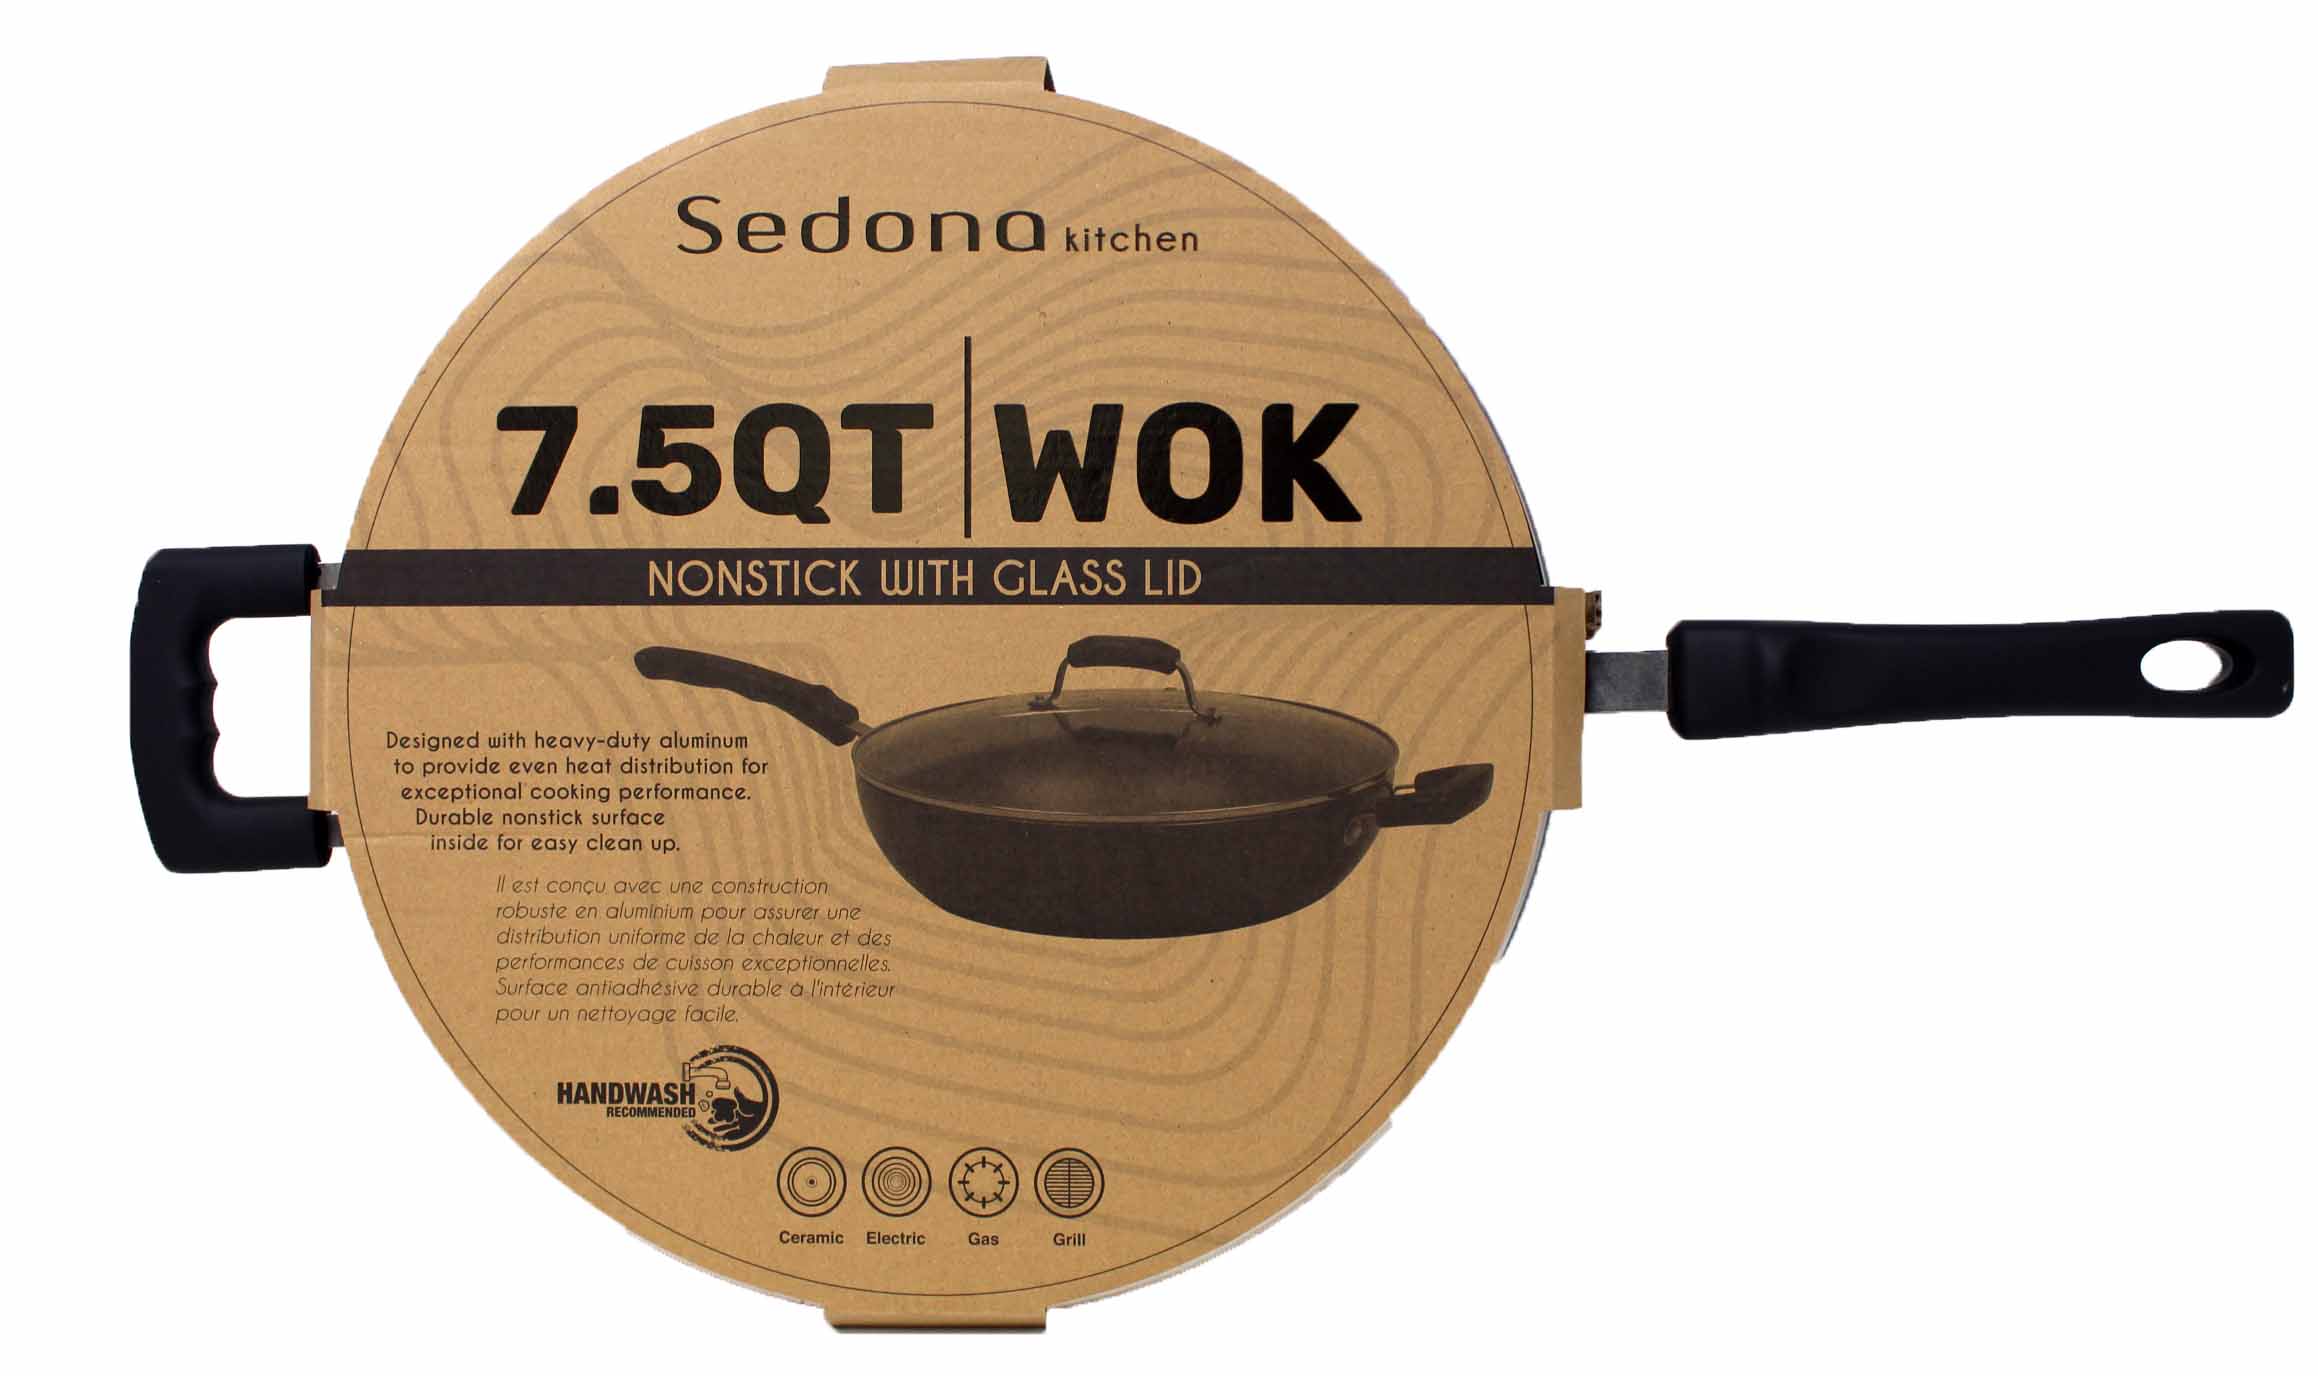 Sedona Non-Stick Black 7.5 QT Wok W/Glass Lid 1 Count - image 1 of 4